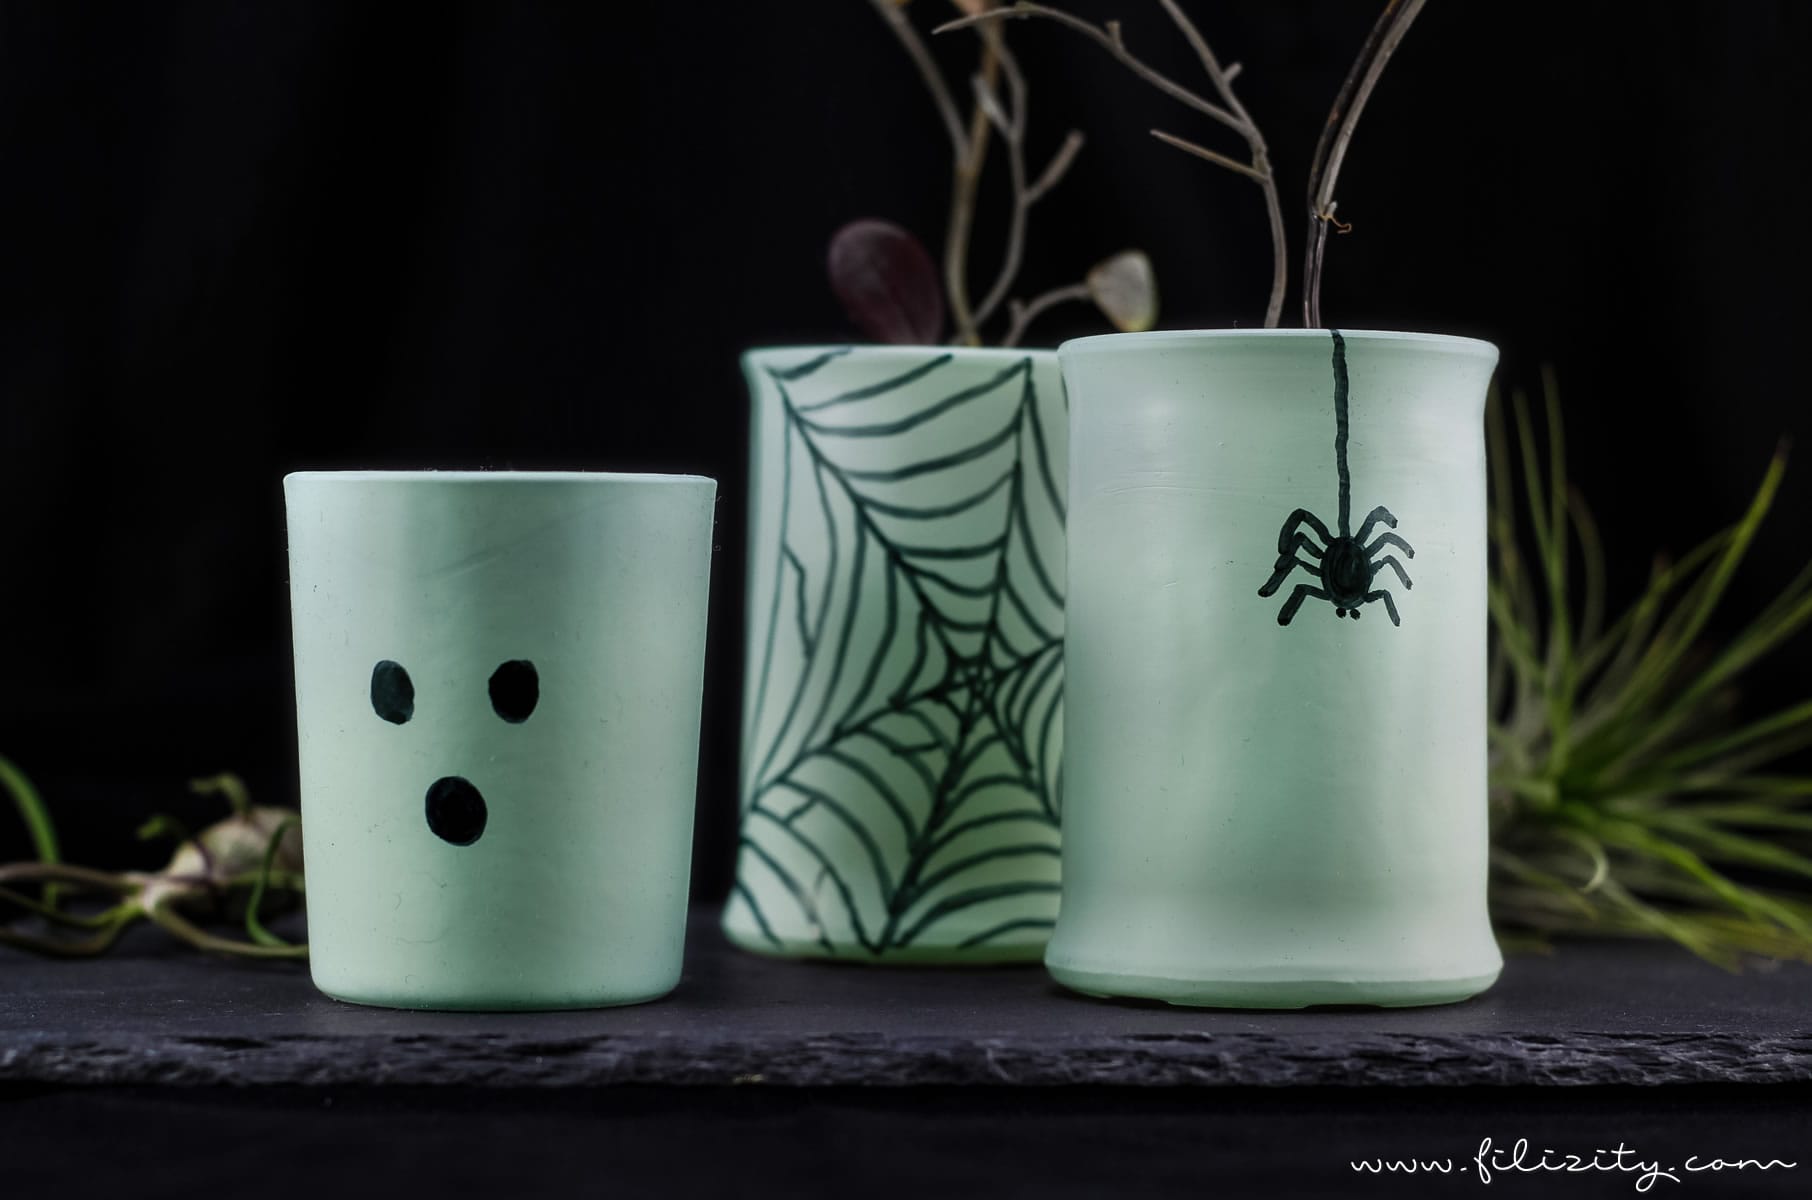 Einfache Halloween Deko Idee: Glow in the dark Vasen selber machen | Filizity.com | DIY-Blog aus dem Rheinland #halloween #deko